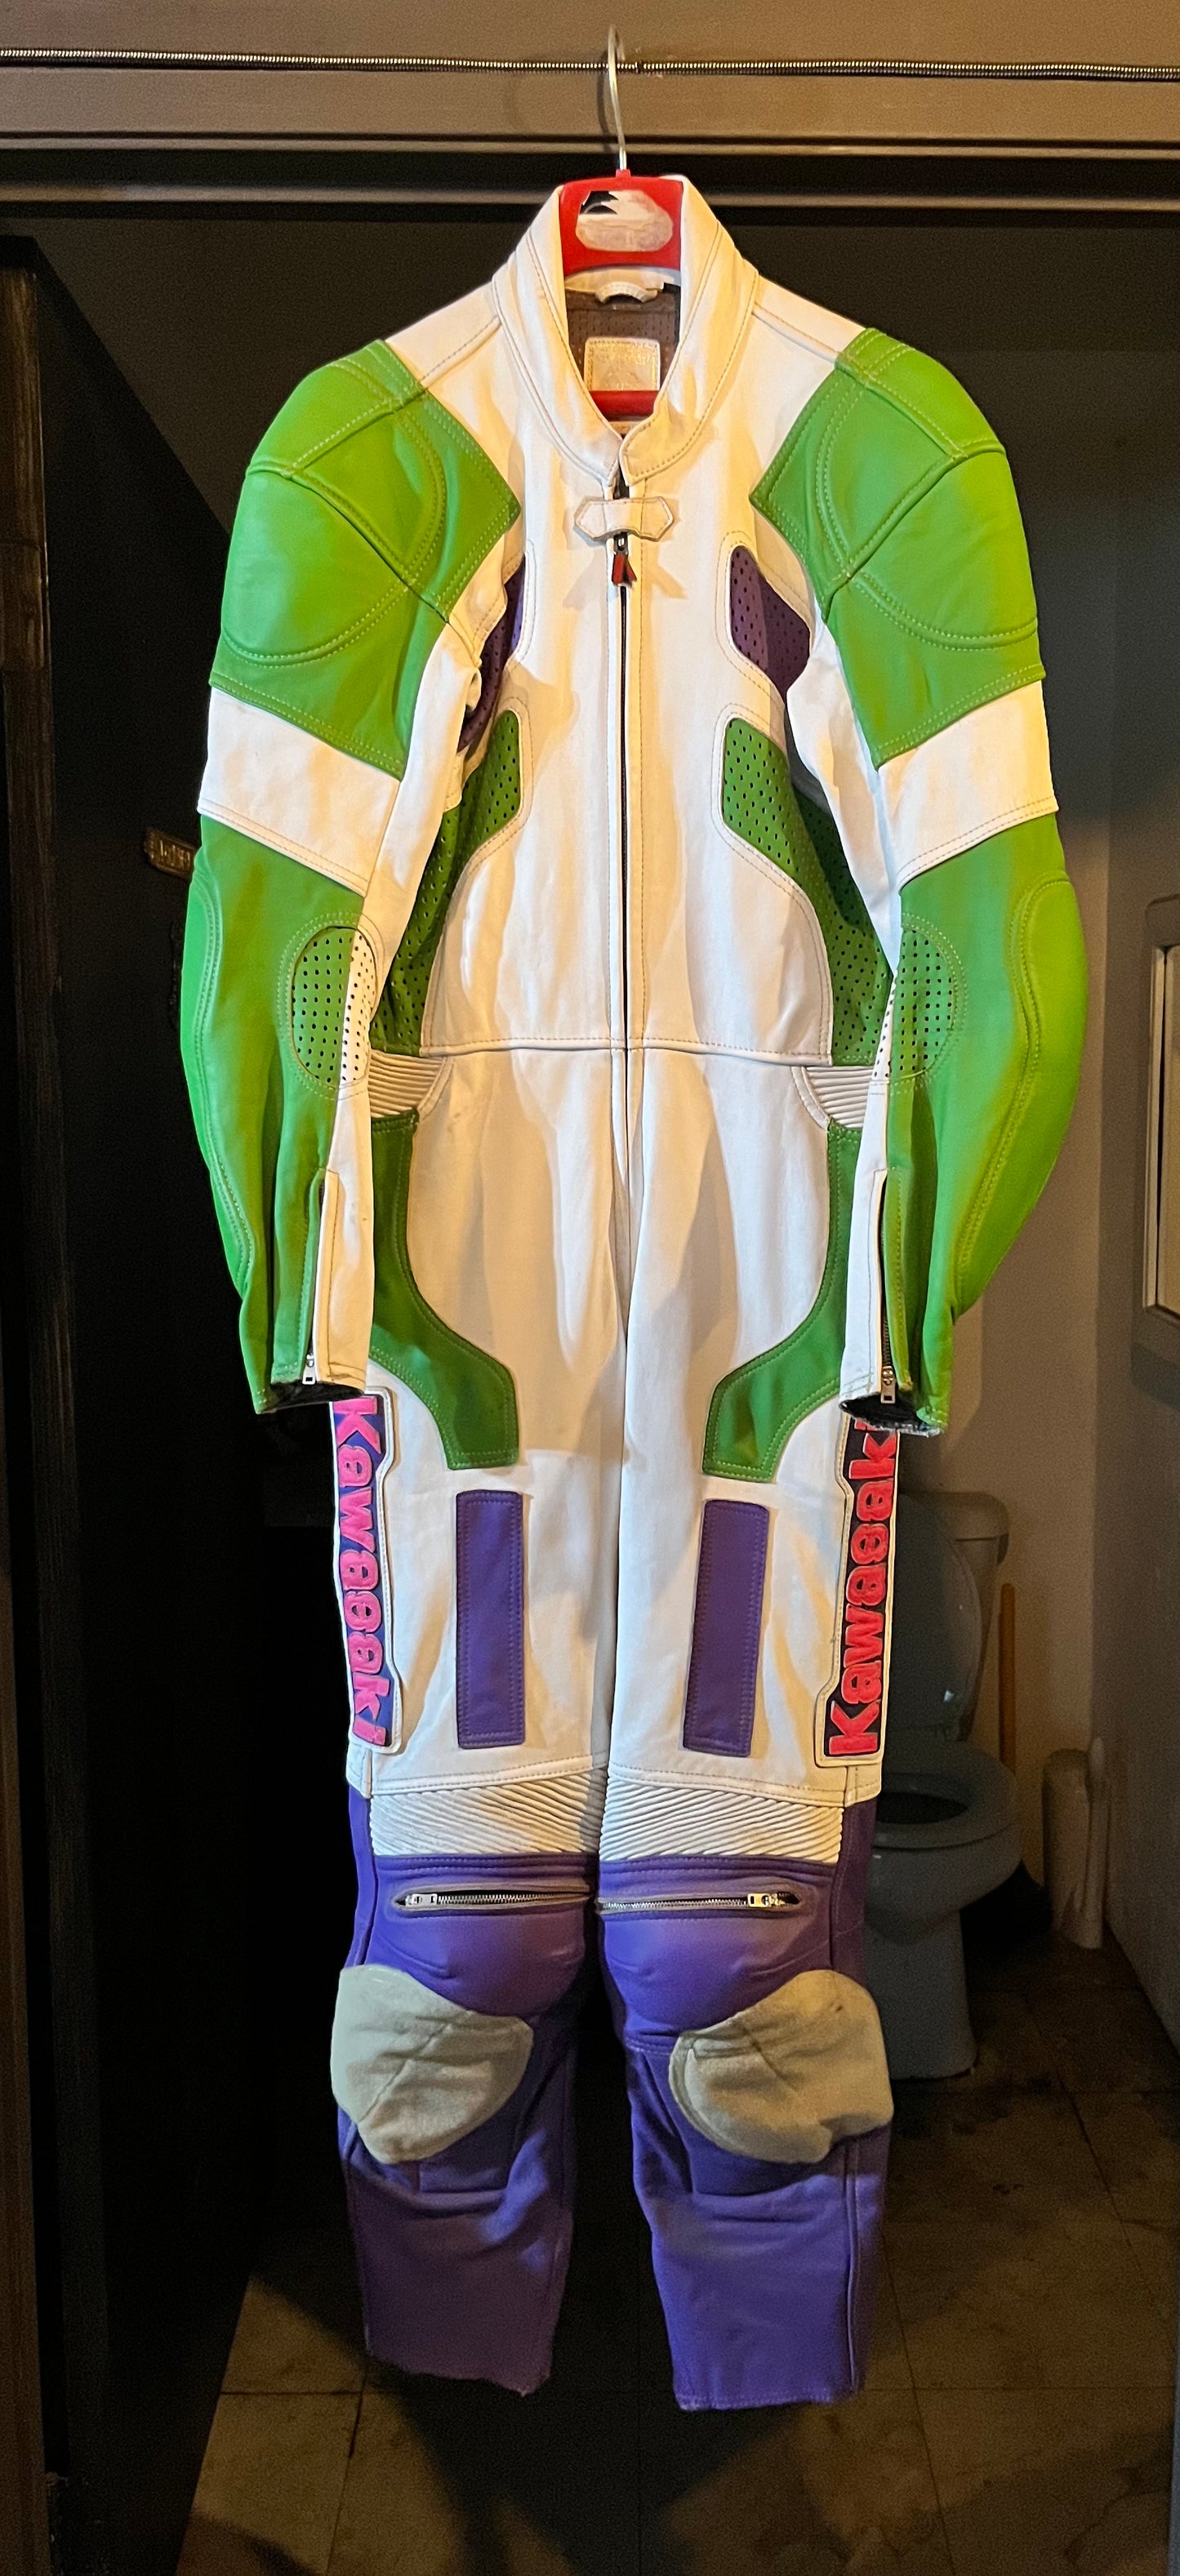 Hein Gericke Kawasaki Ninja one piece race suit